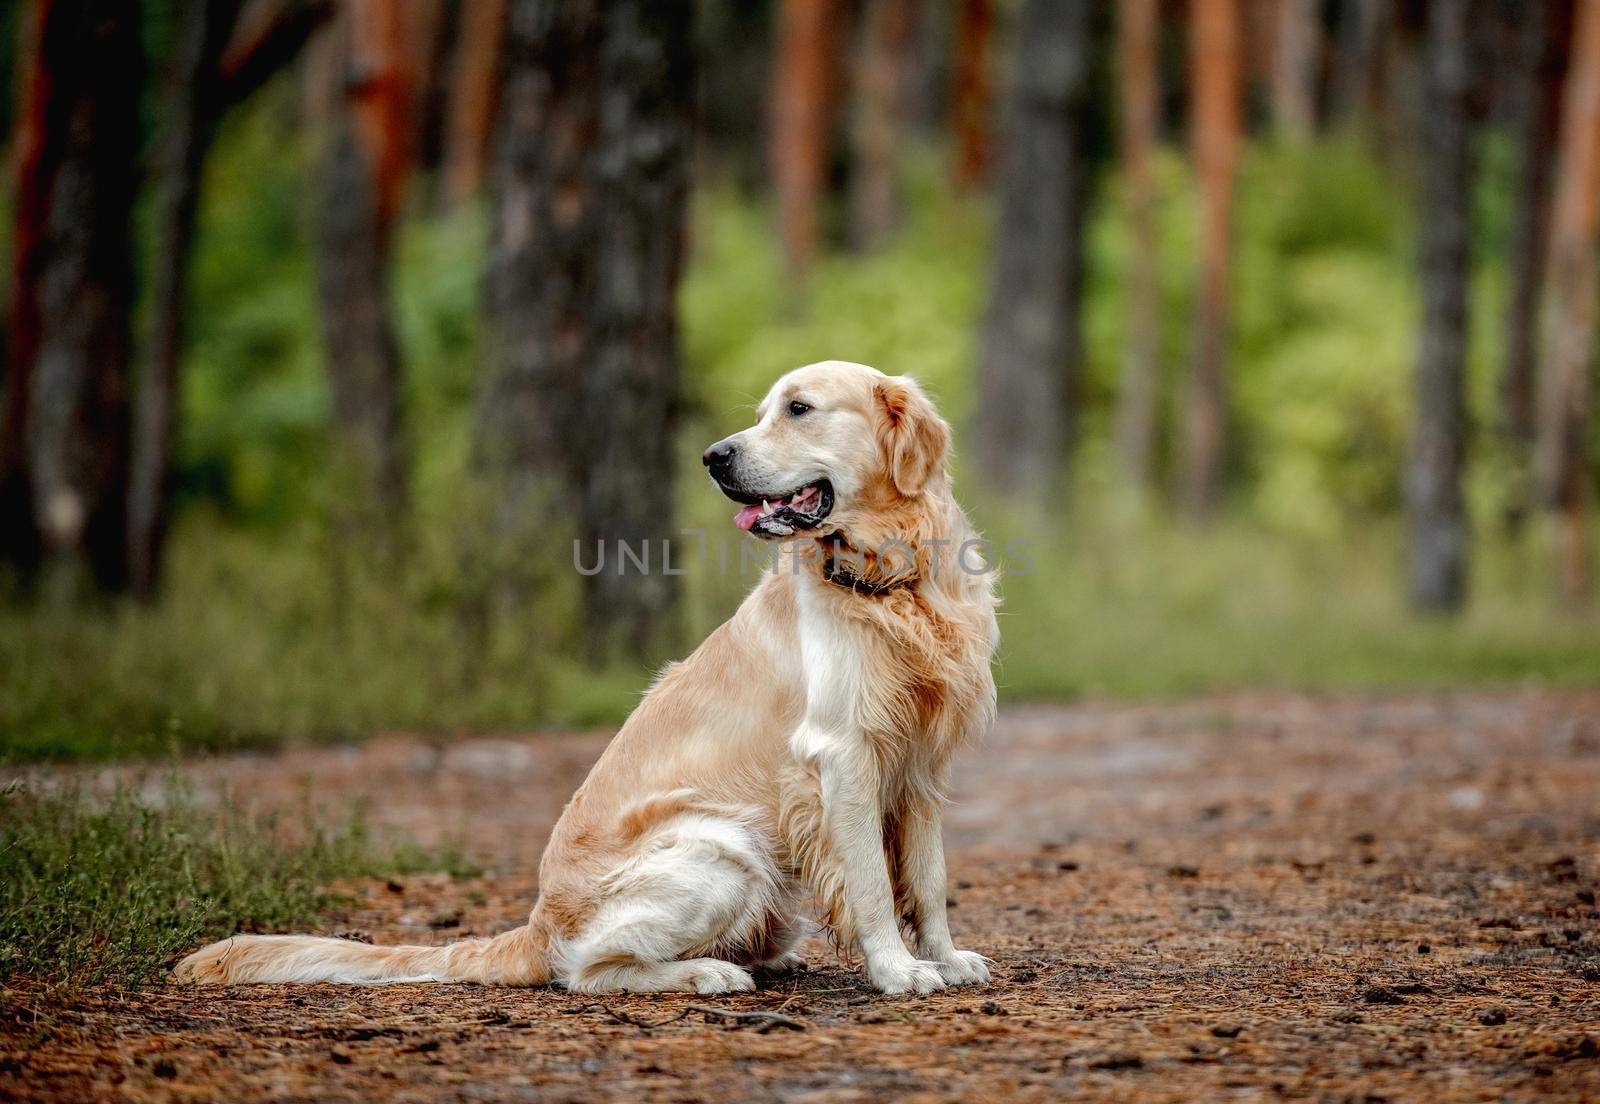 Golden retriever dog in the forest by tan4ikk1